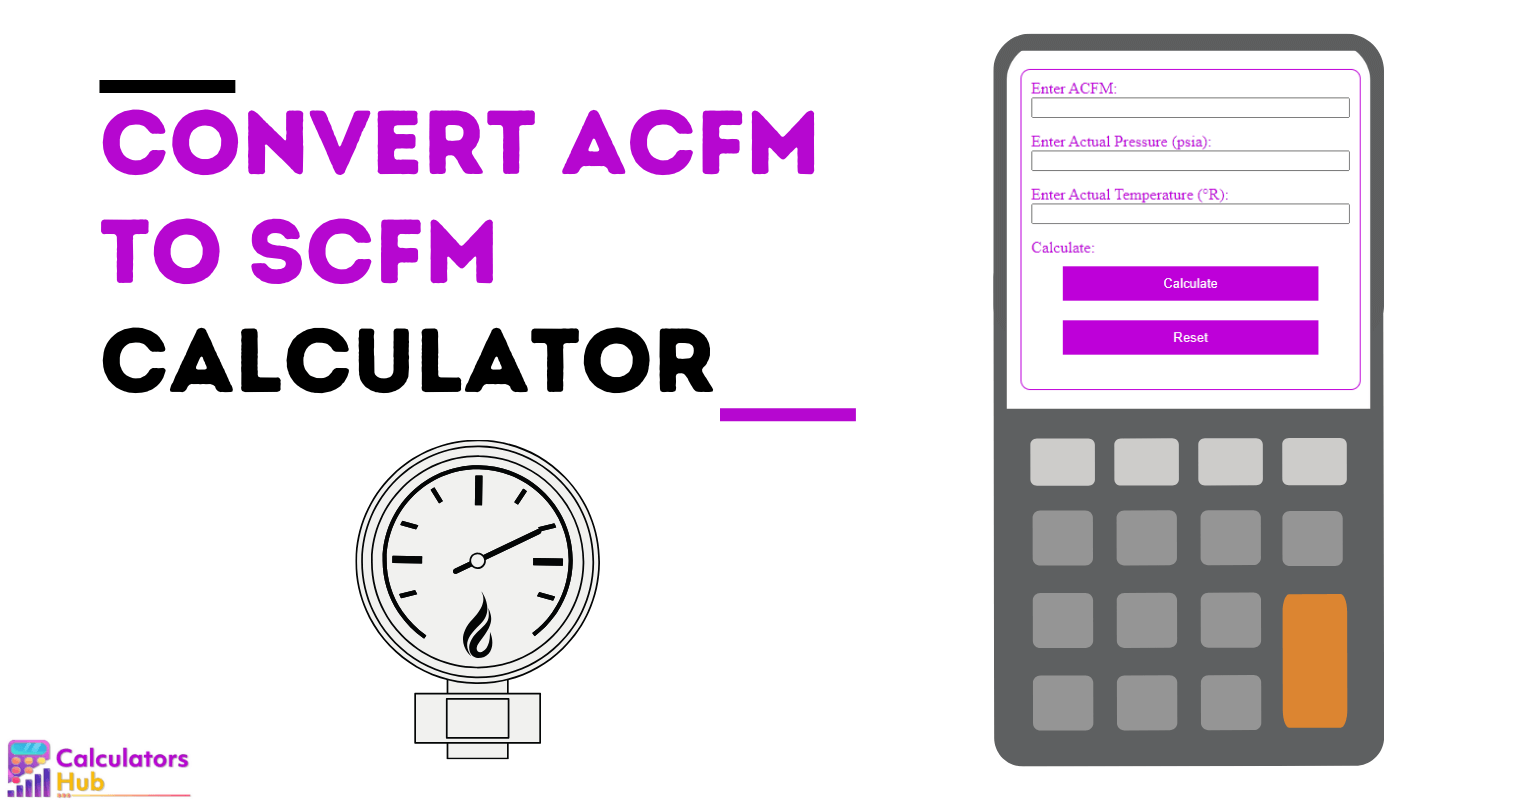 Convert ACFM to SCFM Calculator